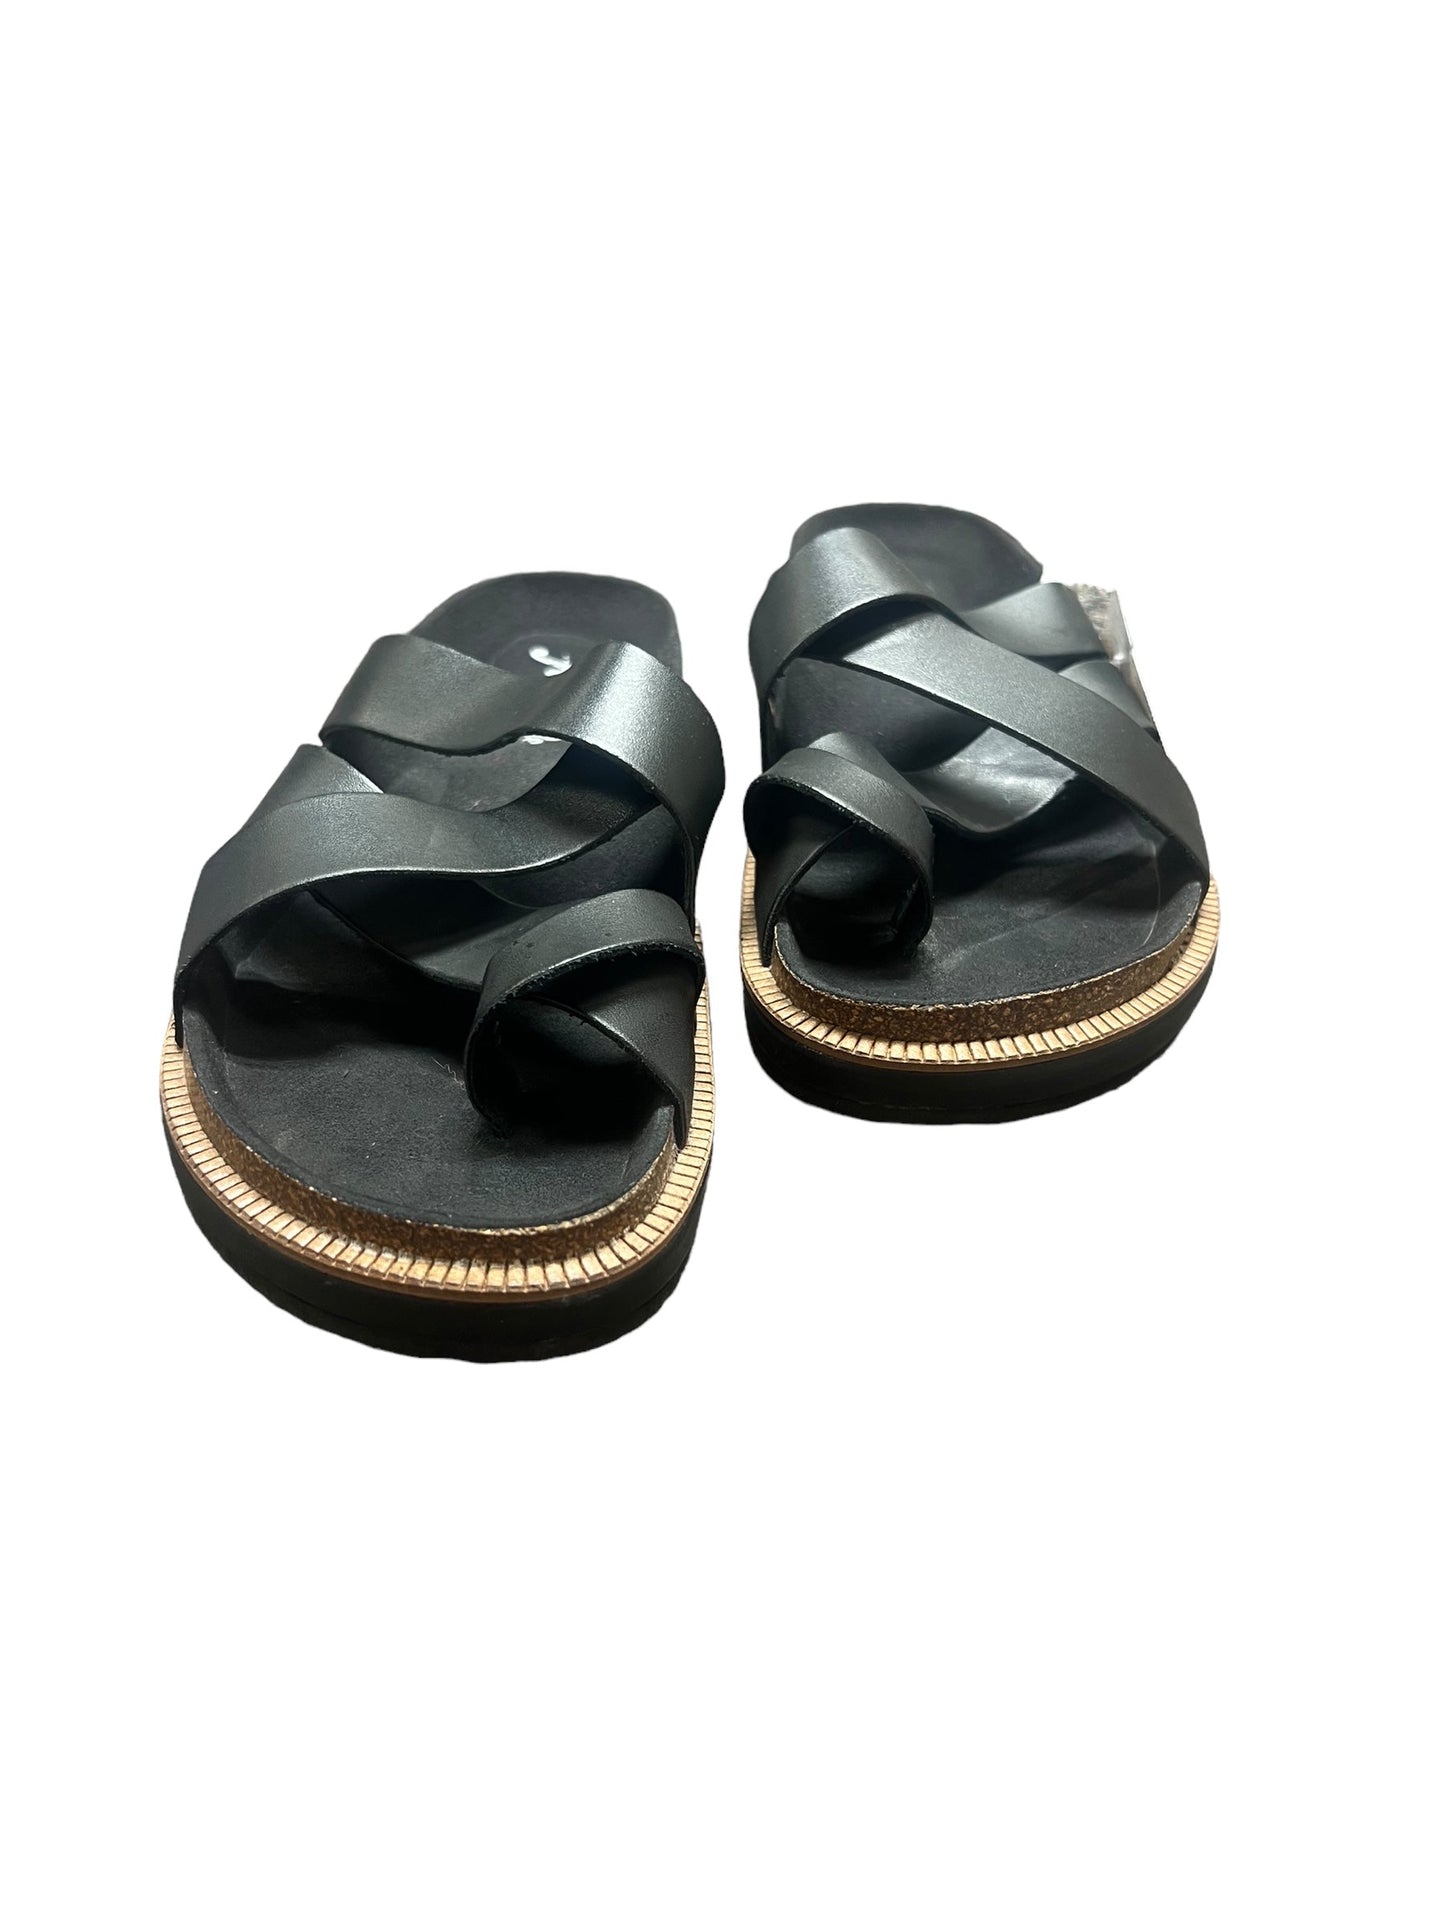 Black Sandals Flats Free People, Size 8.5